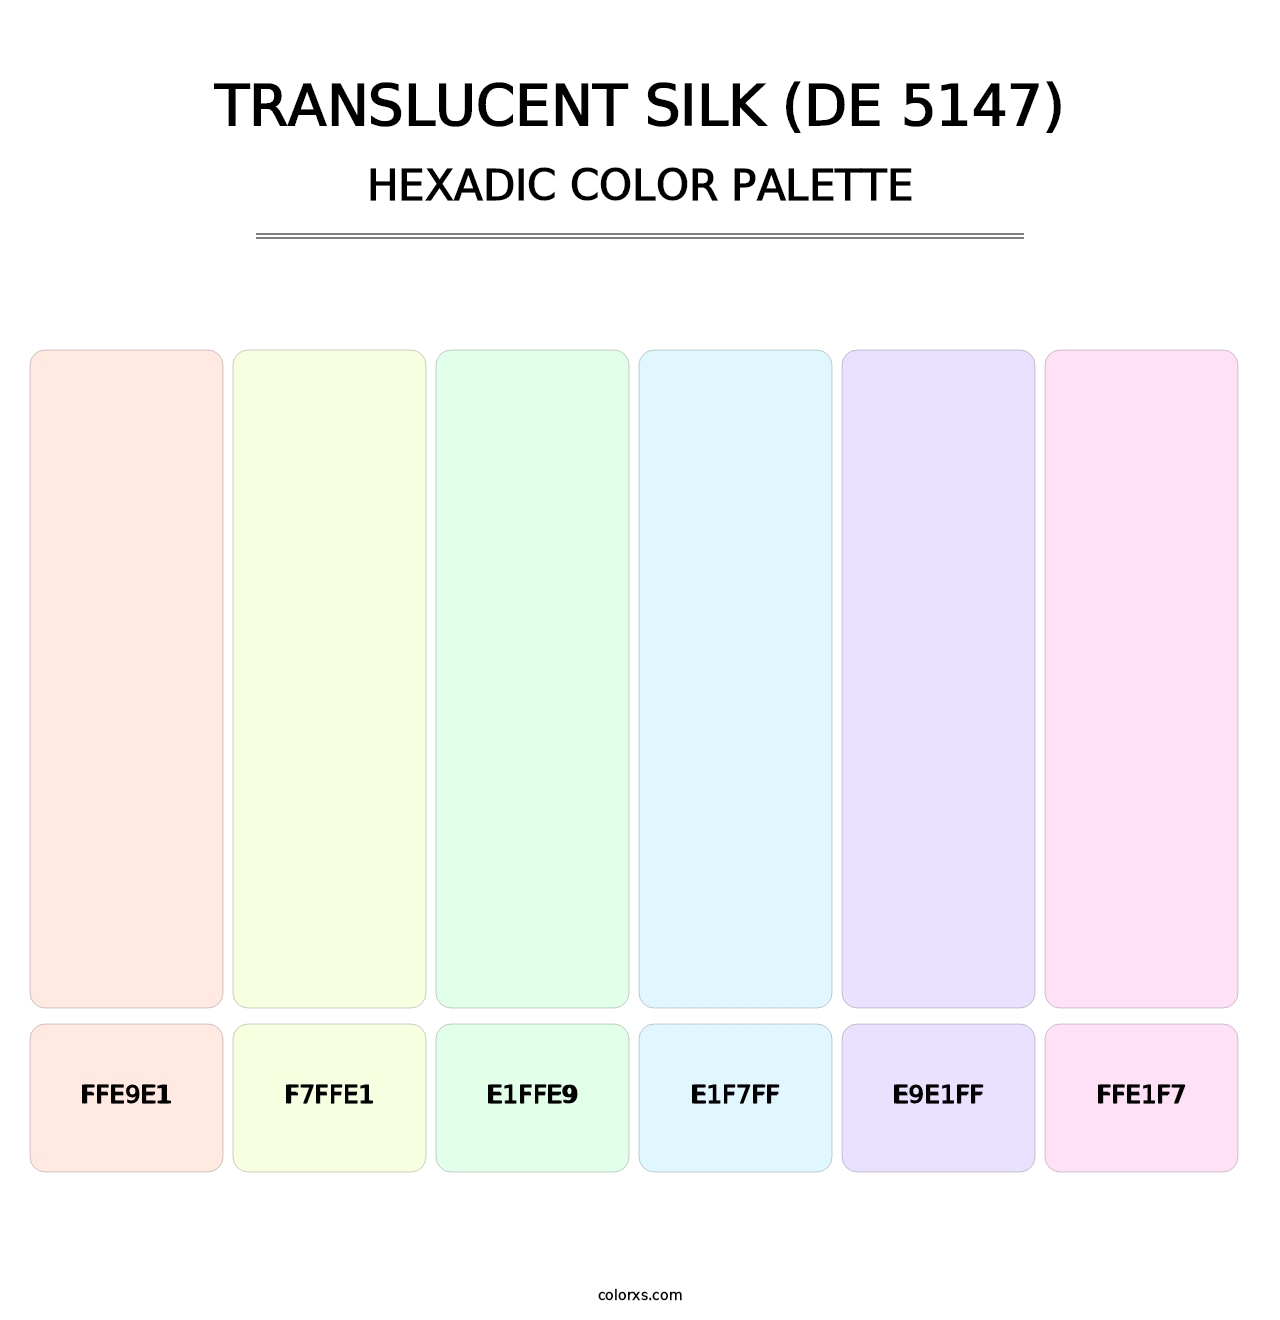 Translucent Silk (DE 5147) - Hexadic Color Palette